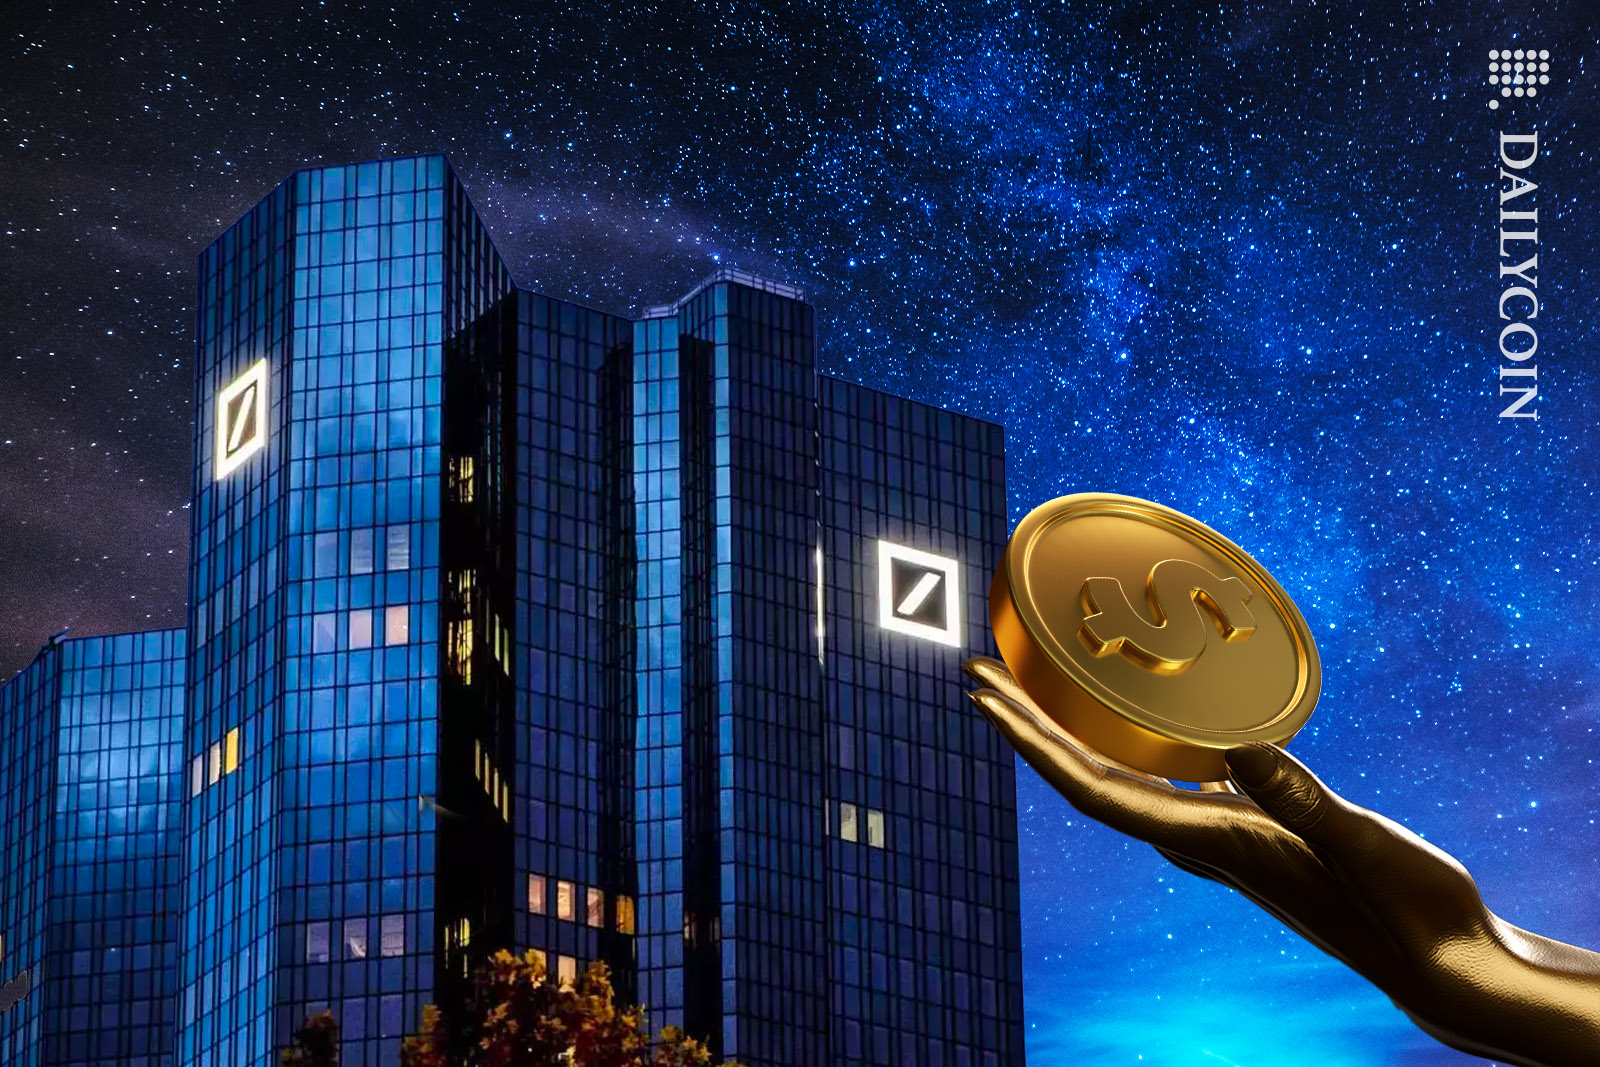 Deutsche Bank being handed a stablecoin.